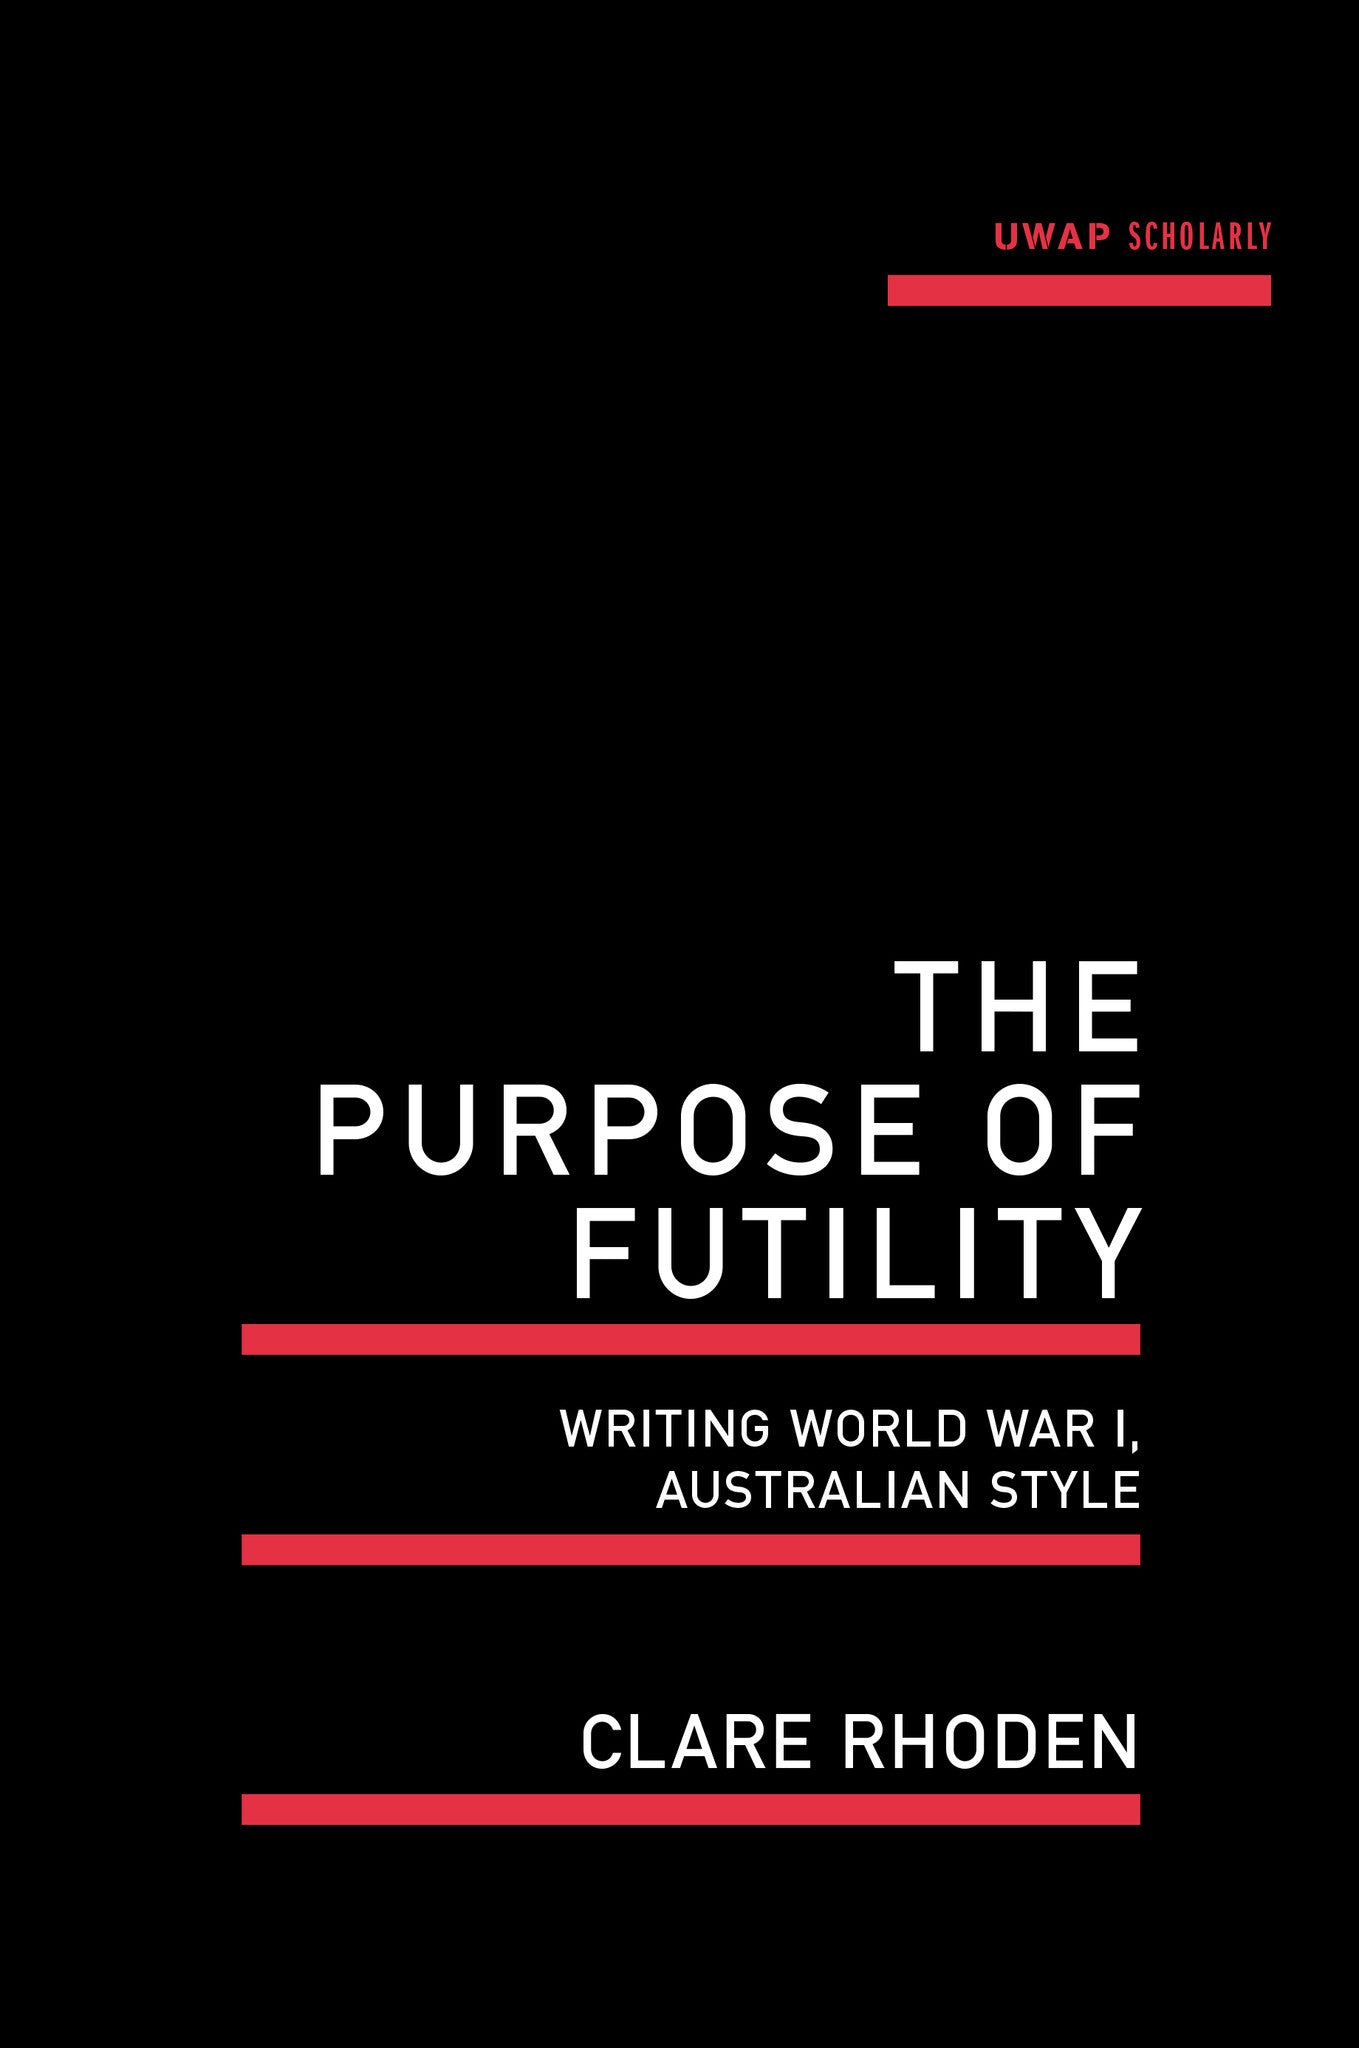 The Purpose of Futility: Writing World War I, Australian style